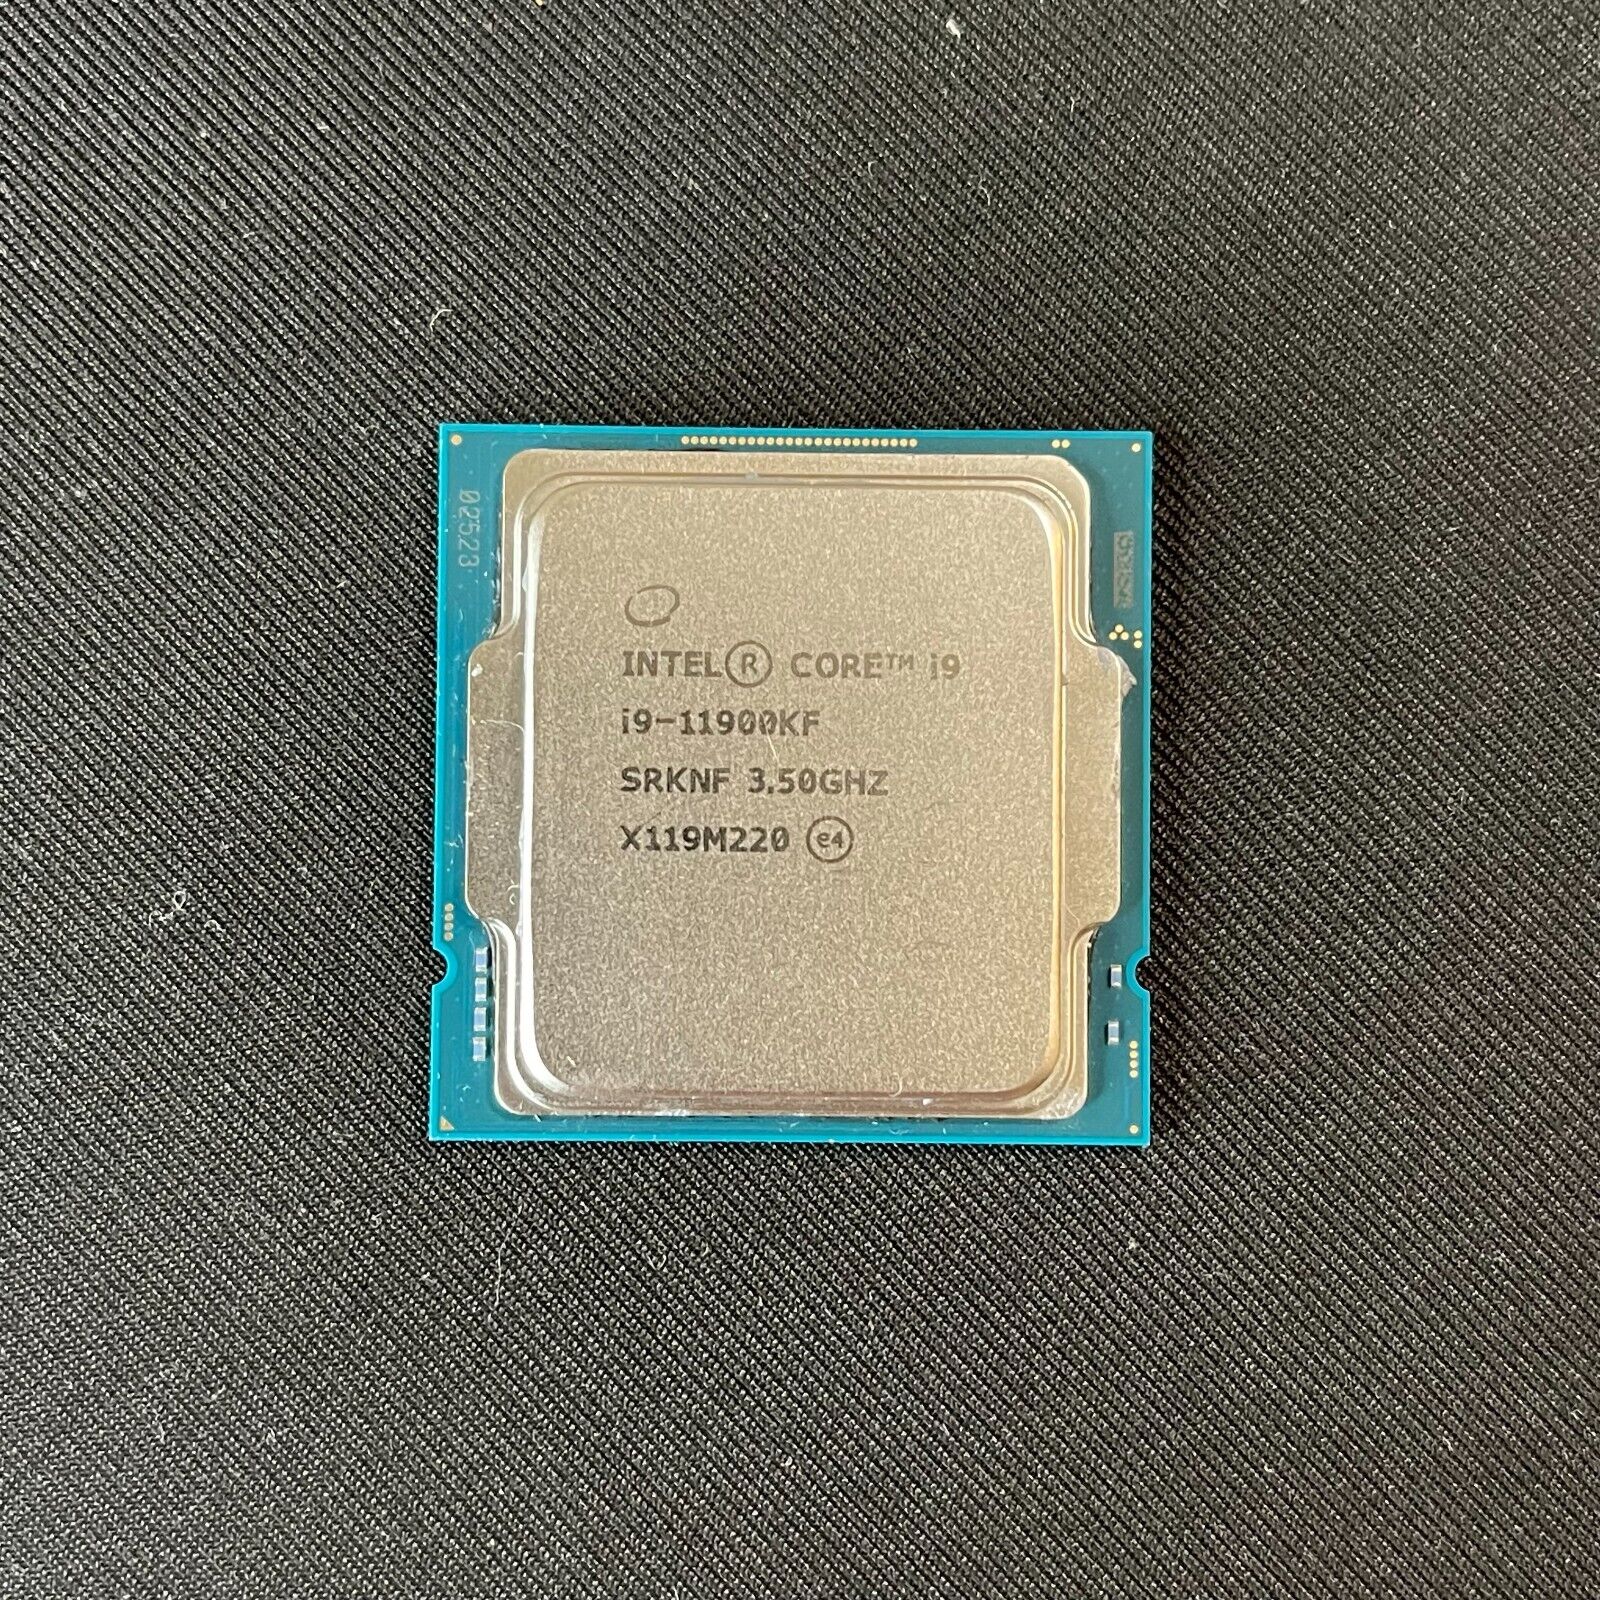 Intel Core i9-11900KF (8 Core, 16 Thread, 5.3GHz) LGA1200 CPU Desktop Processor